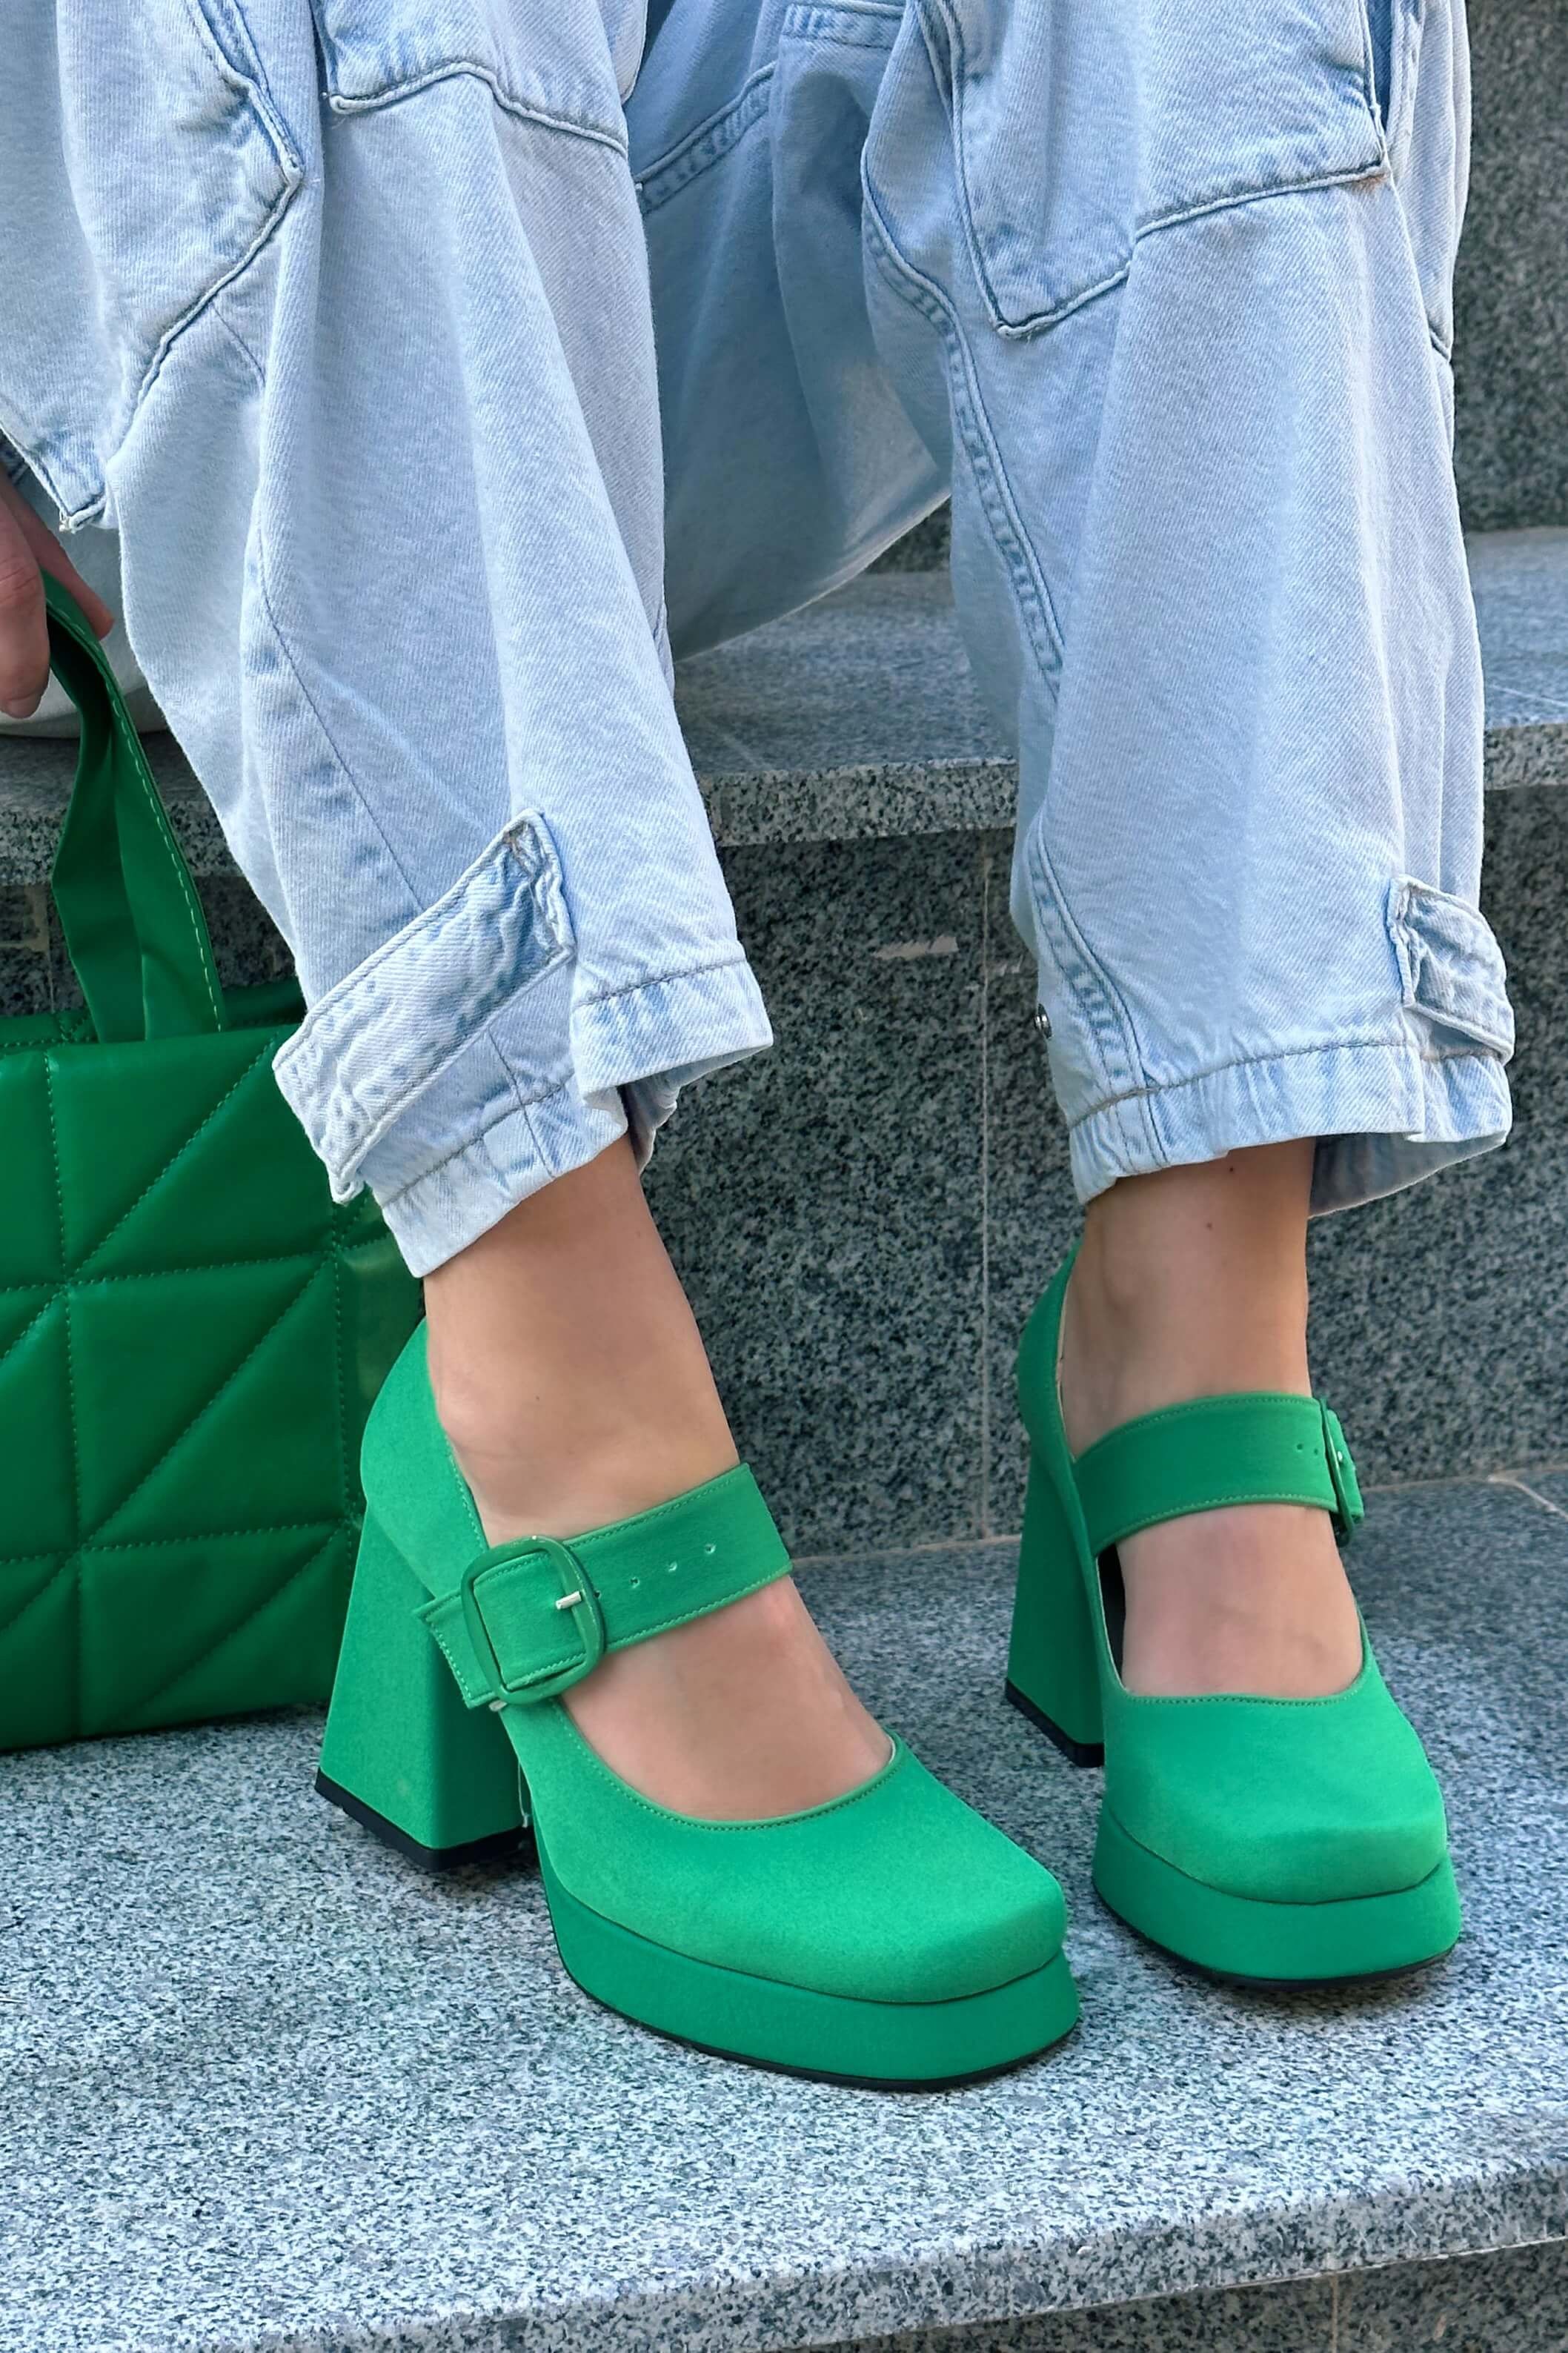 Alpons Satin Woman Platform Heels Shoes Green